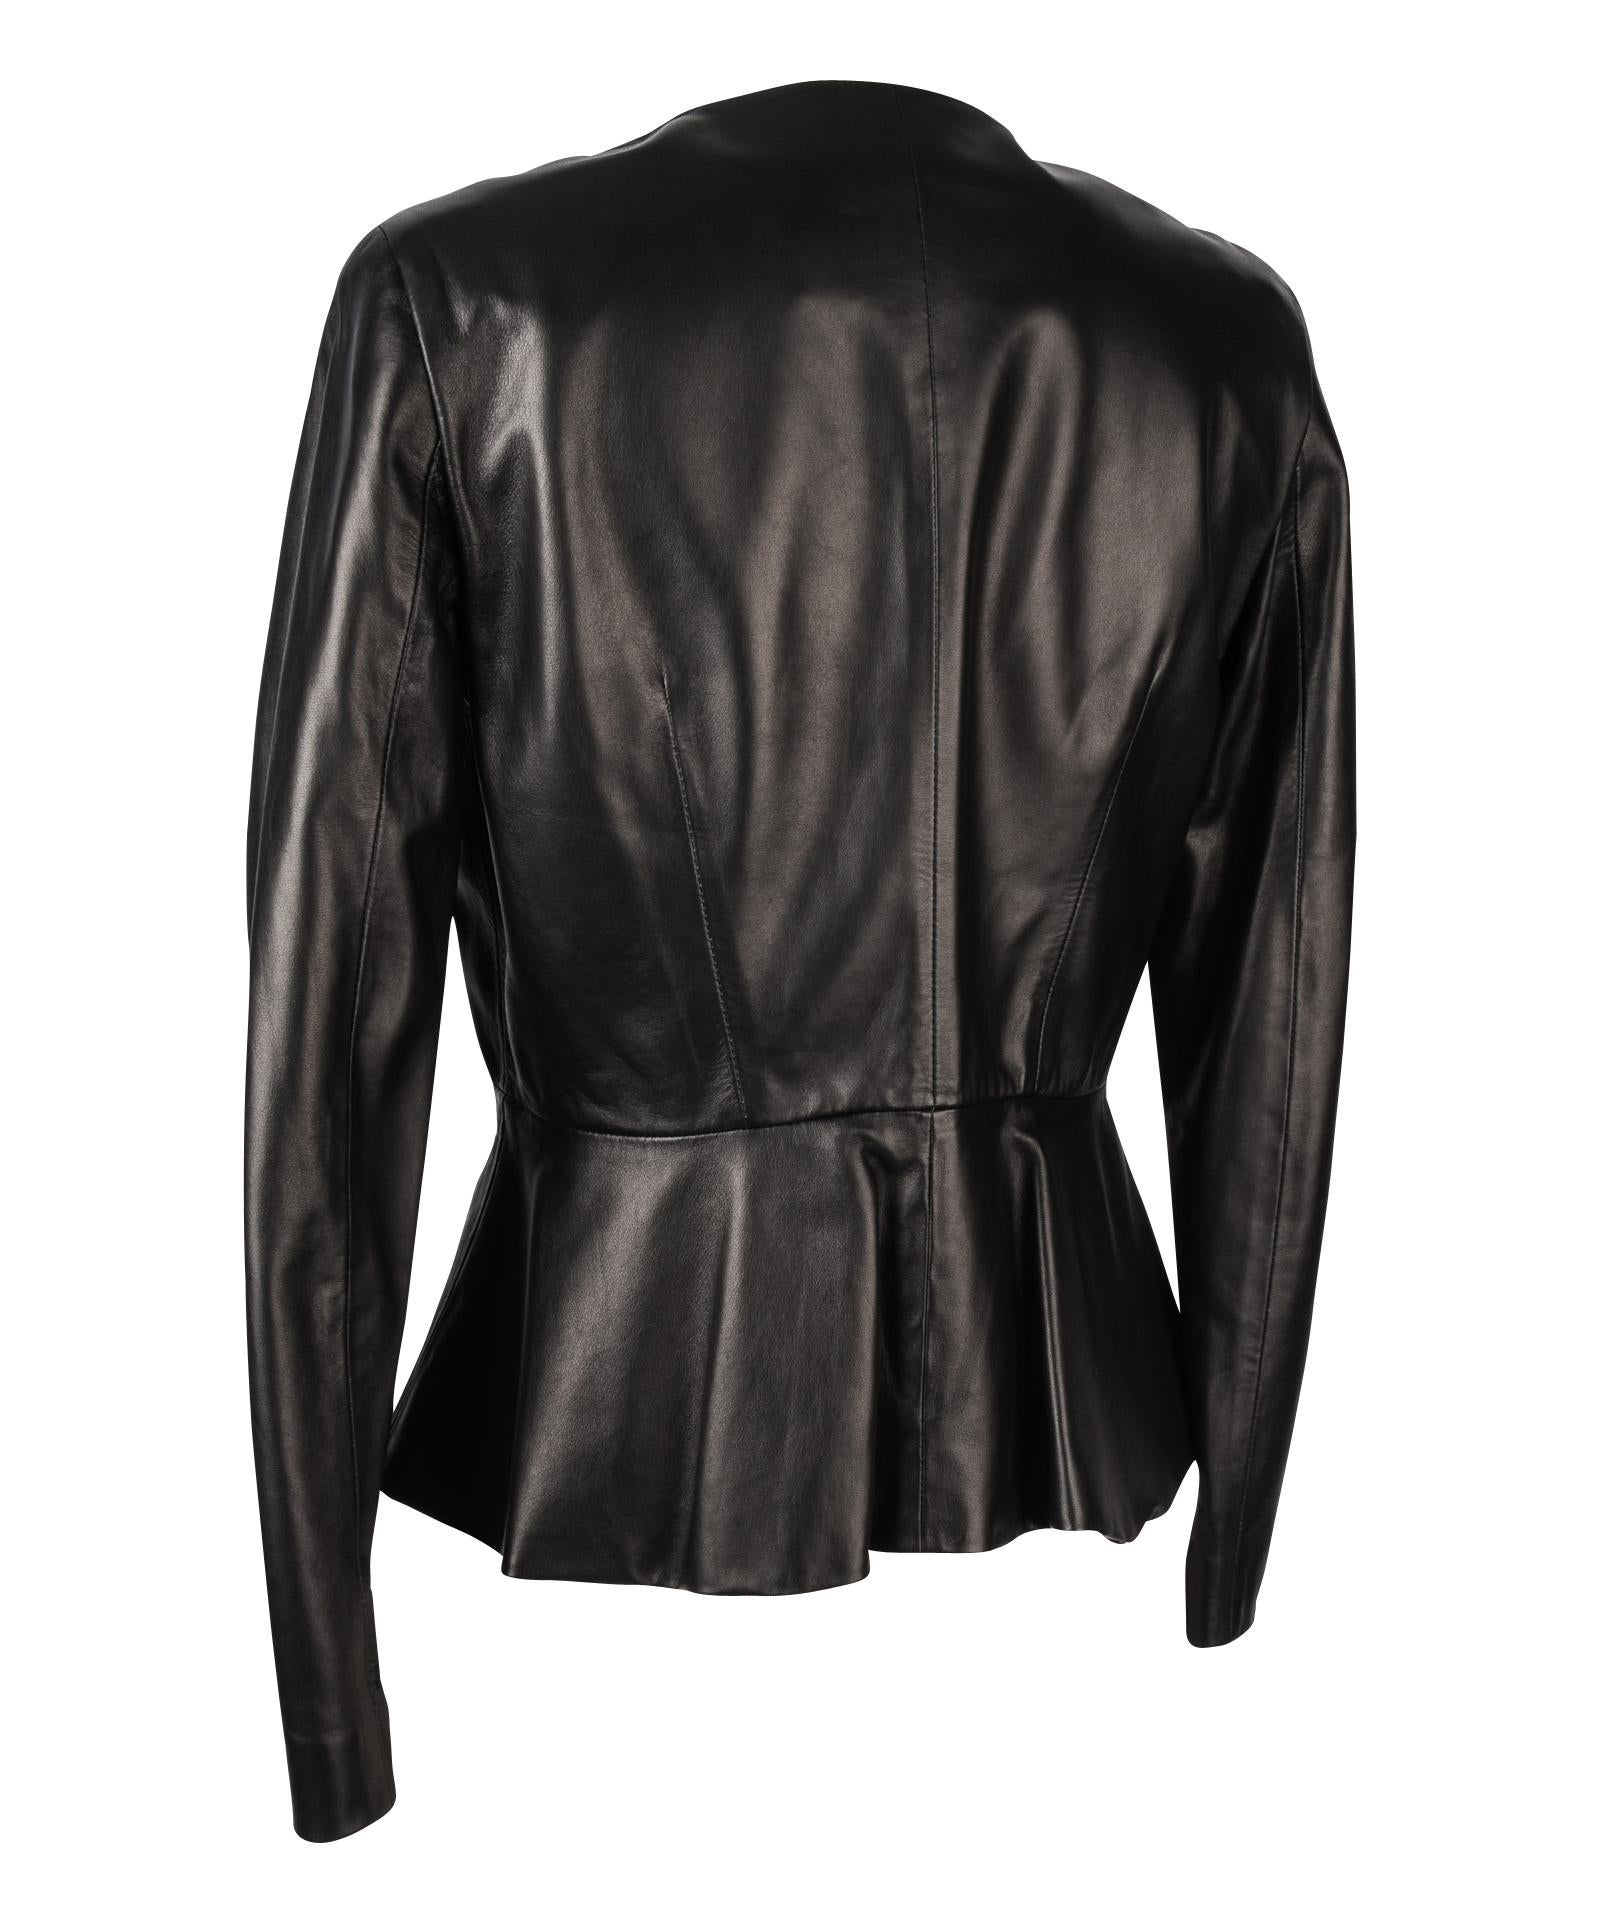 Women's Carolina Herrera Jacket Peplum Black Lambskin Leather Feather Light 8 mint